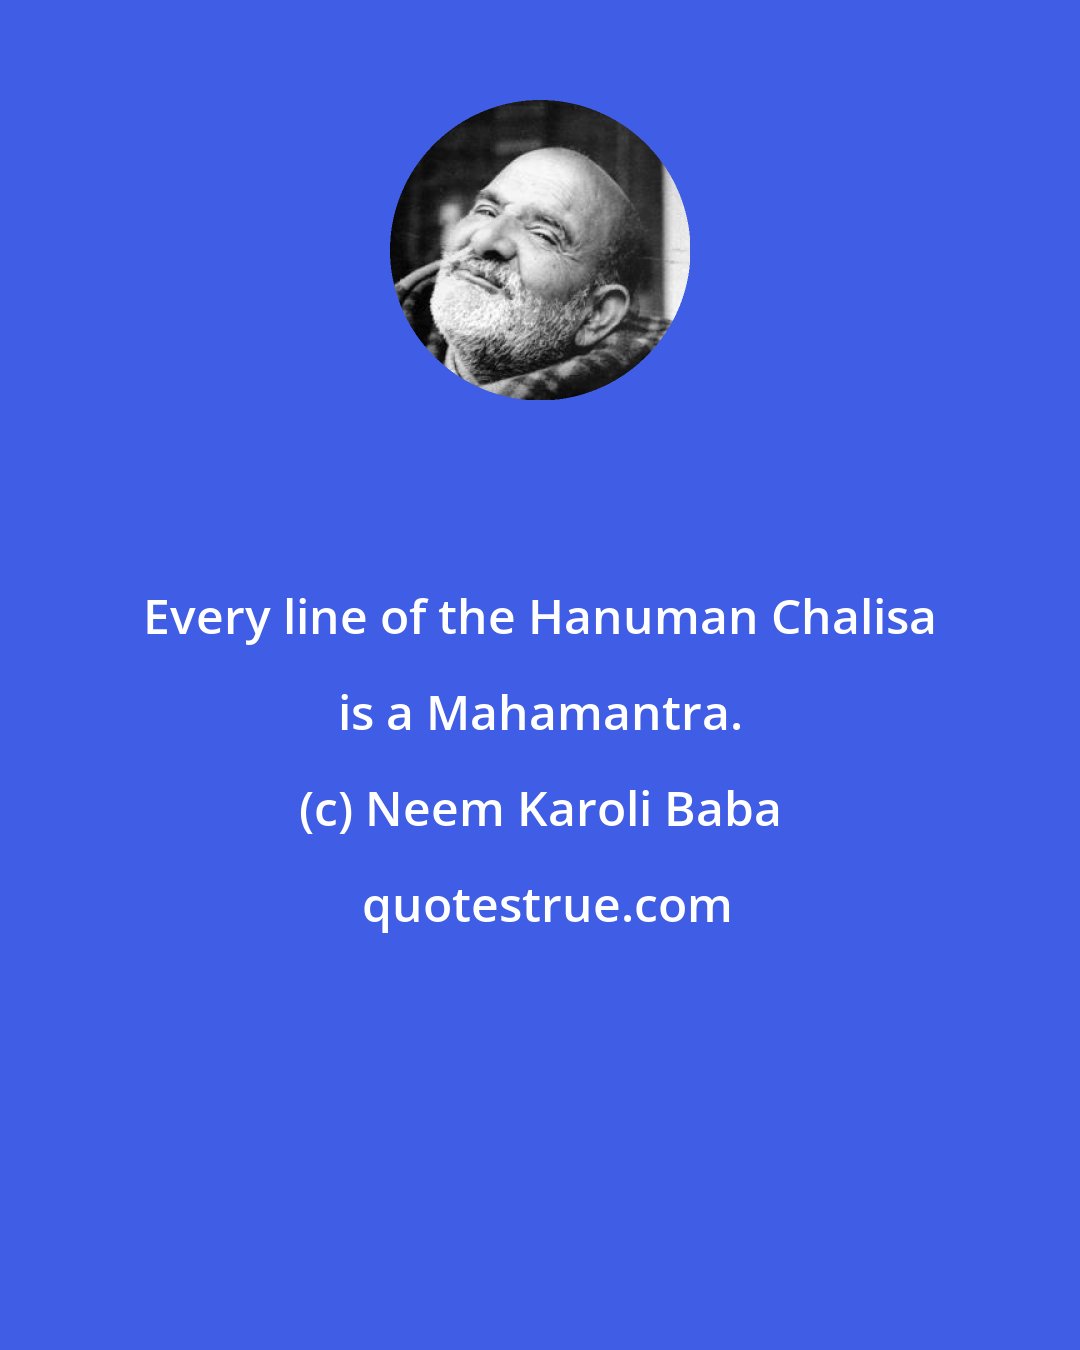 Neem Karoli Baba: Every line of the Hanuman Chalisa is a Mahamantra.